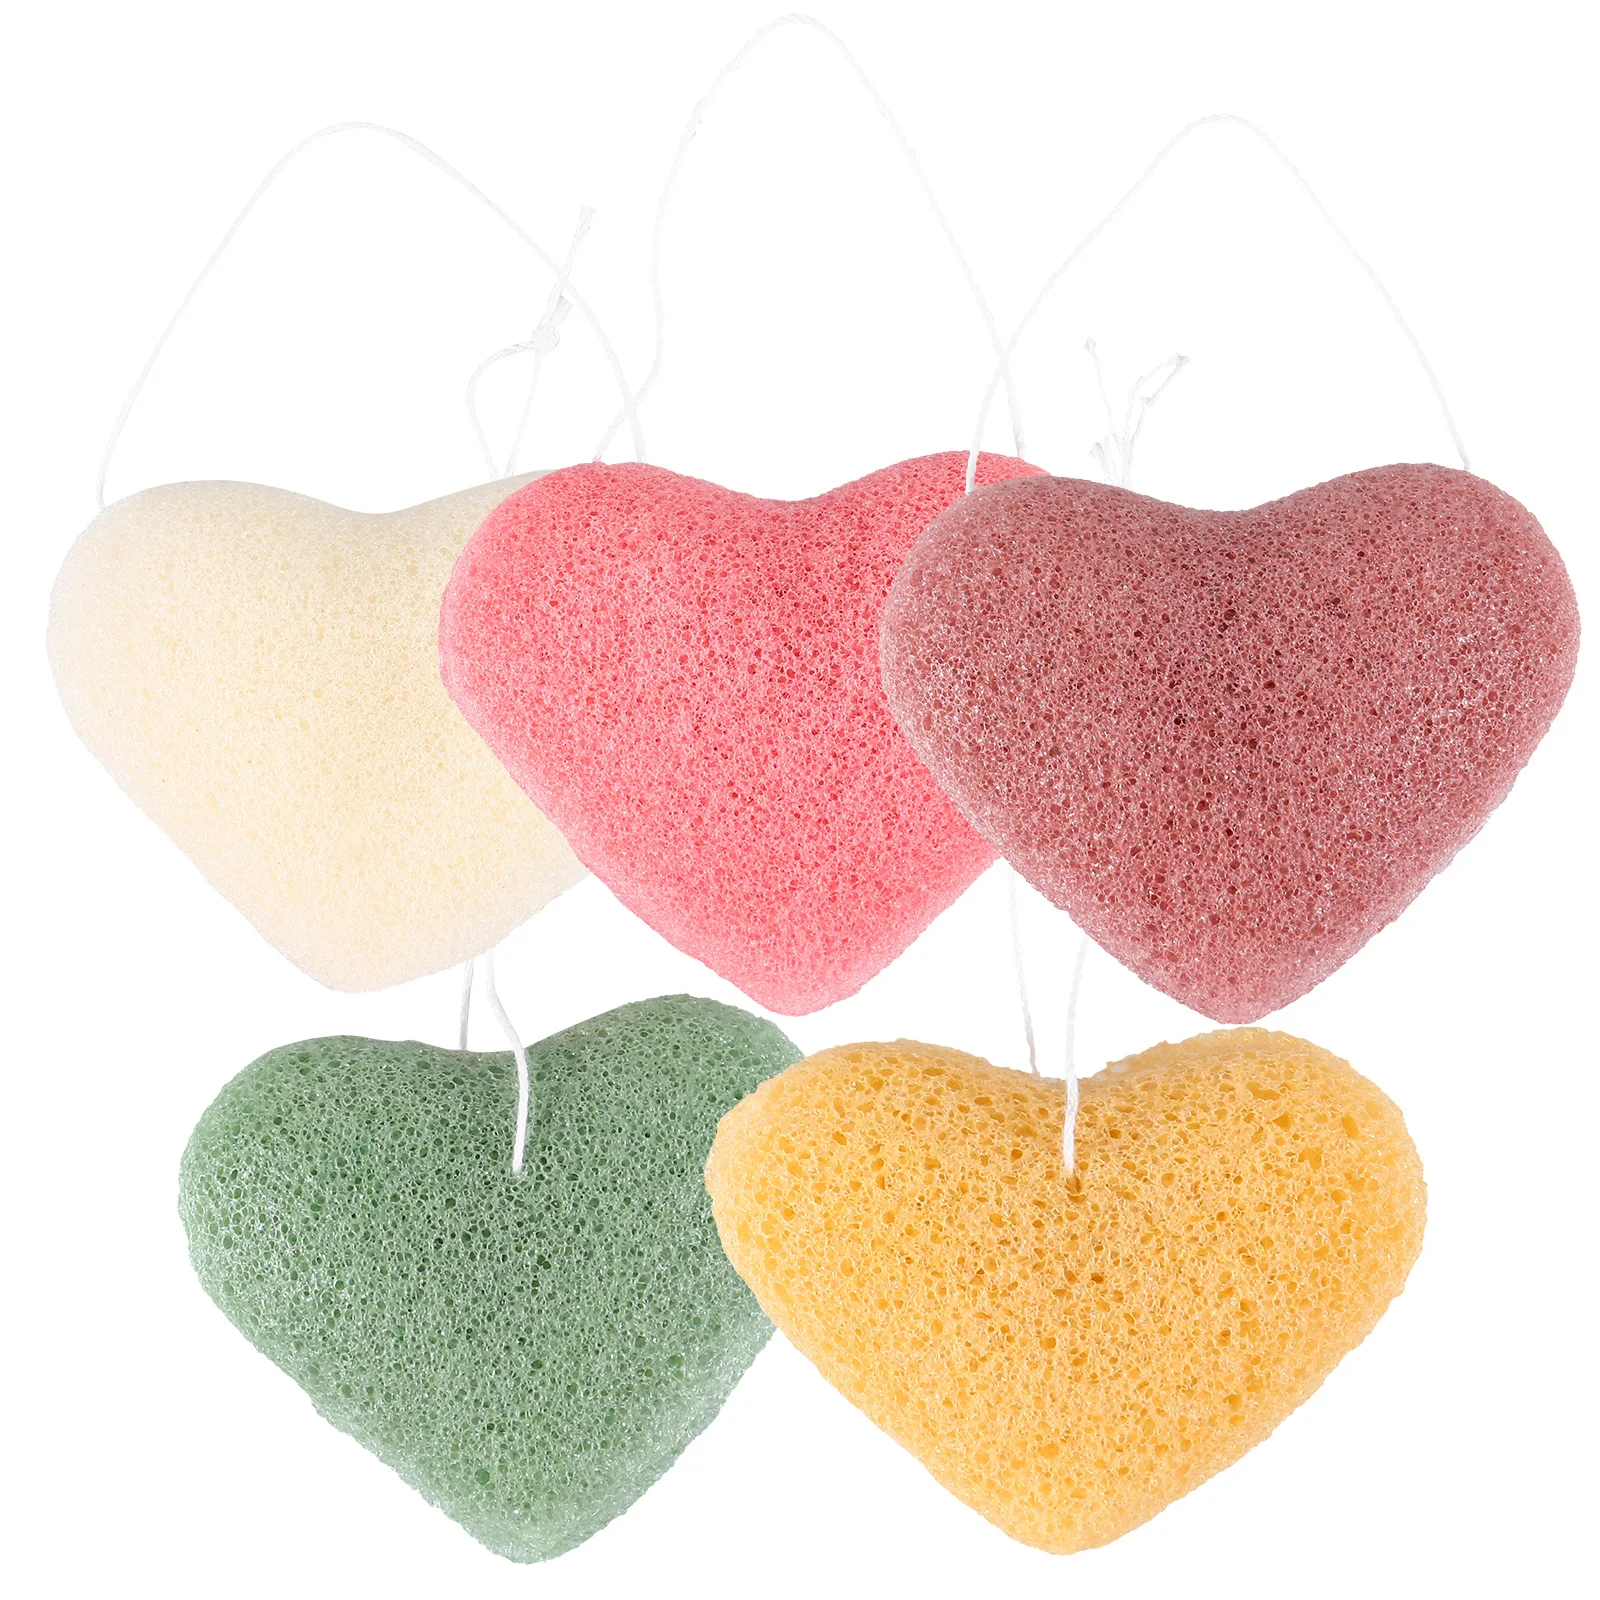 

5 Pcs Heart Shaped Face Wash Sponge for Cleansing Compression Makeup Pads Sponges Puffs